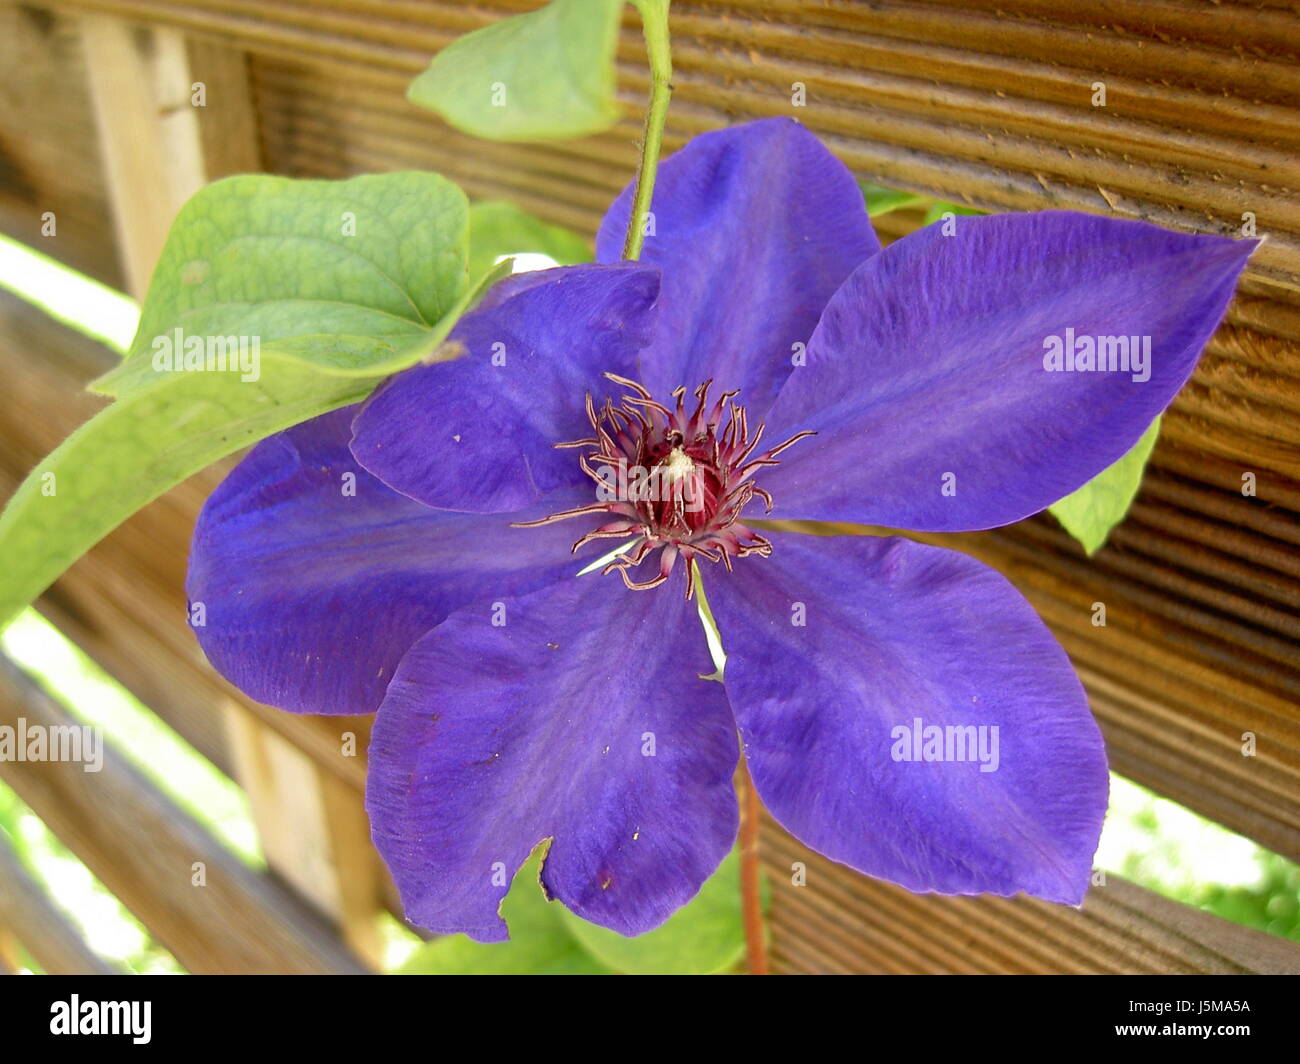 blue flower plant bloom blossom flourish flourishing clematis climbing plant Stock Photo